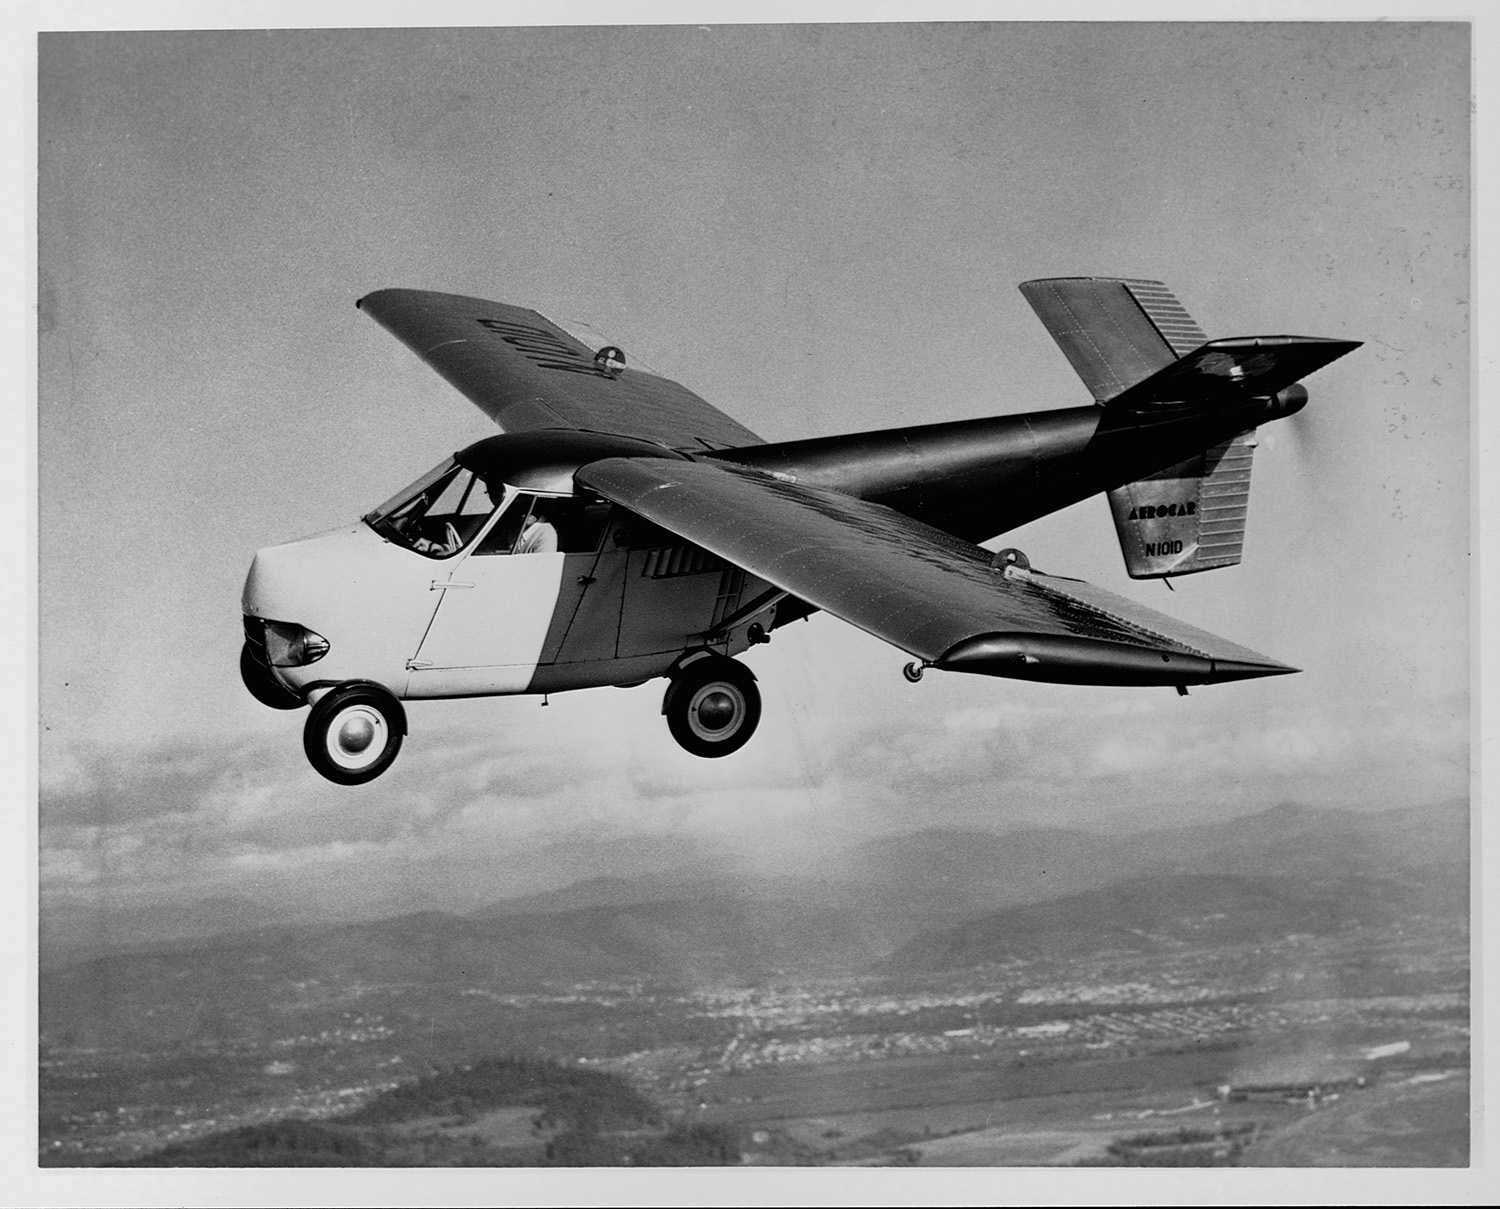 Taylor Aerocar Flying Car N101D in the air